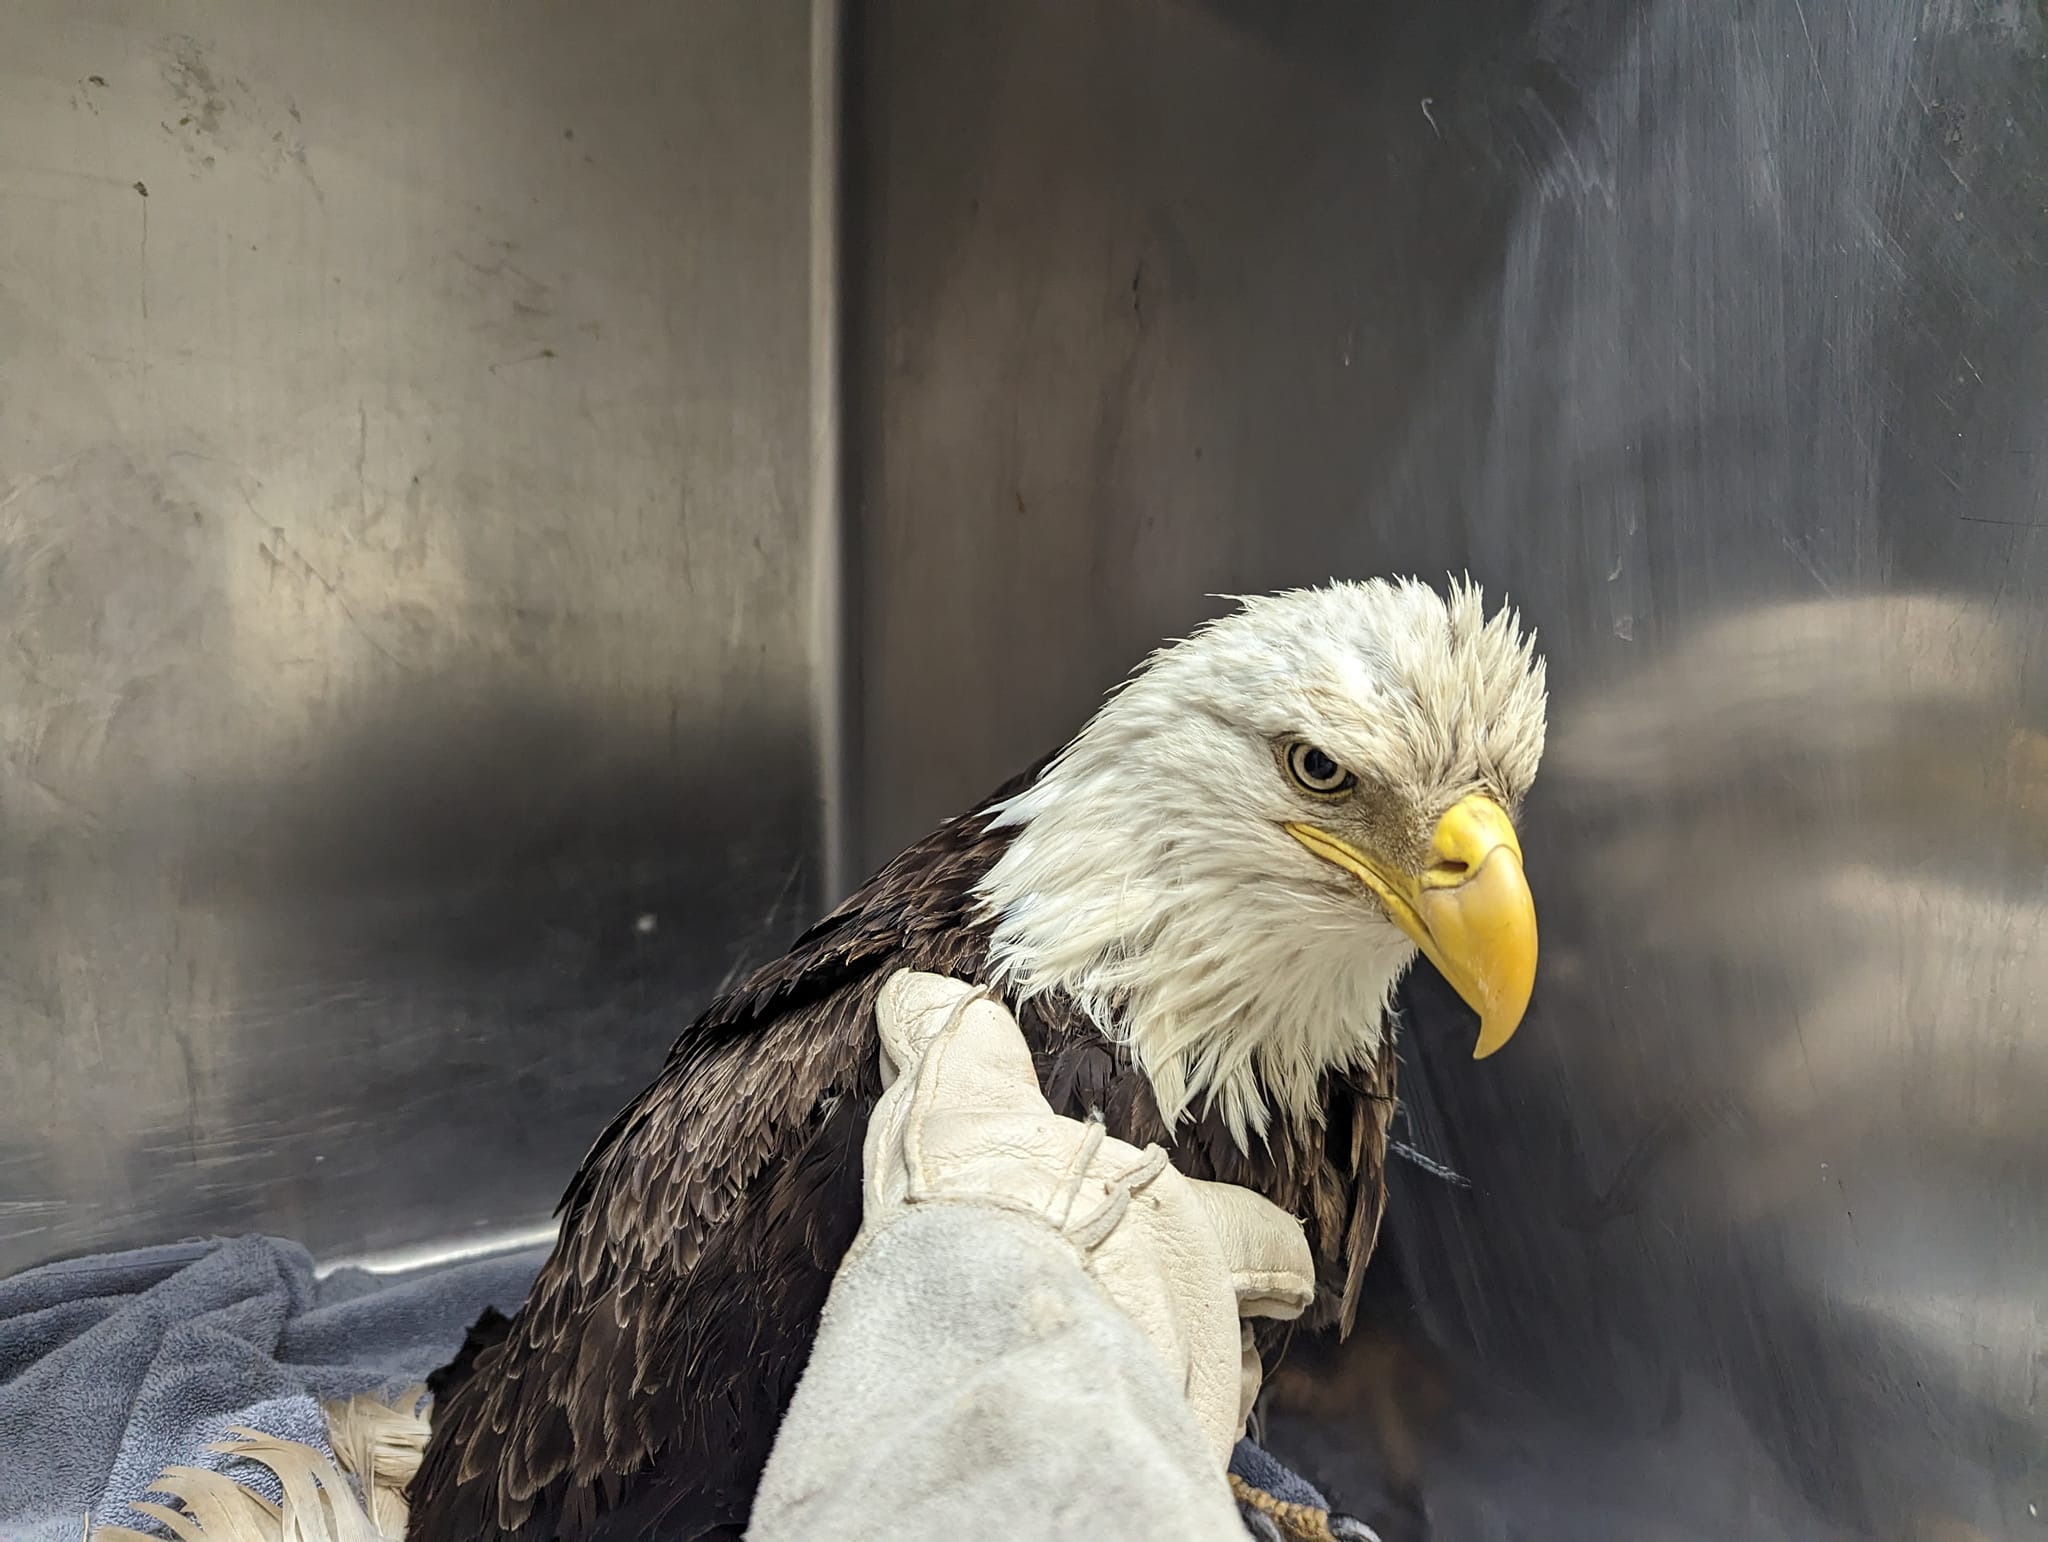 Injured eagle rebounds at Indiana wildlife rehab center [Video]